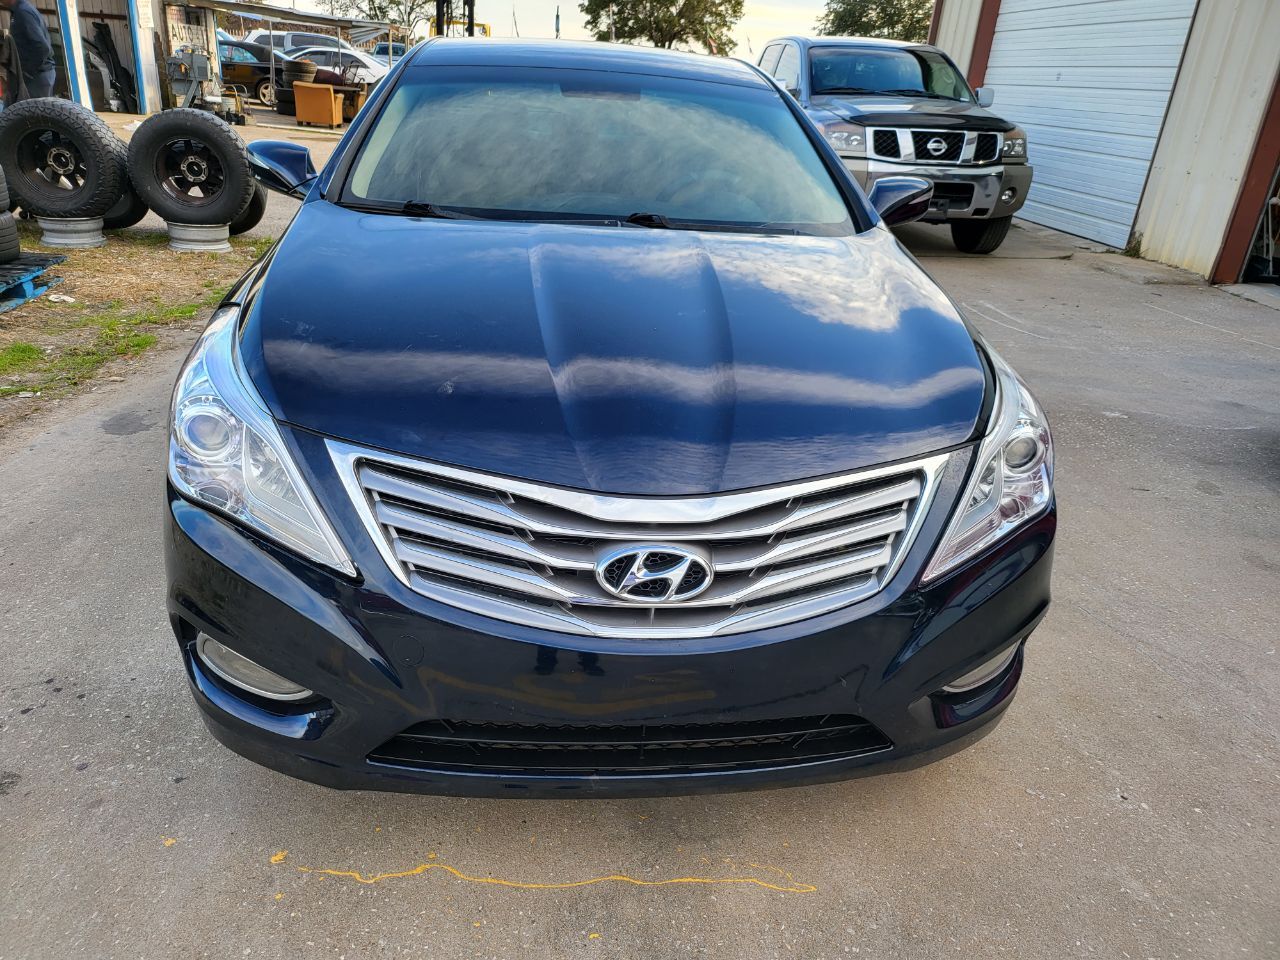 Hyundai Azera For Sale In Texas - Carsforsale.com®